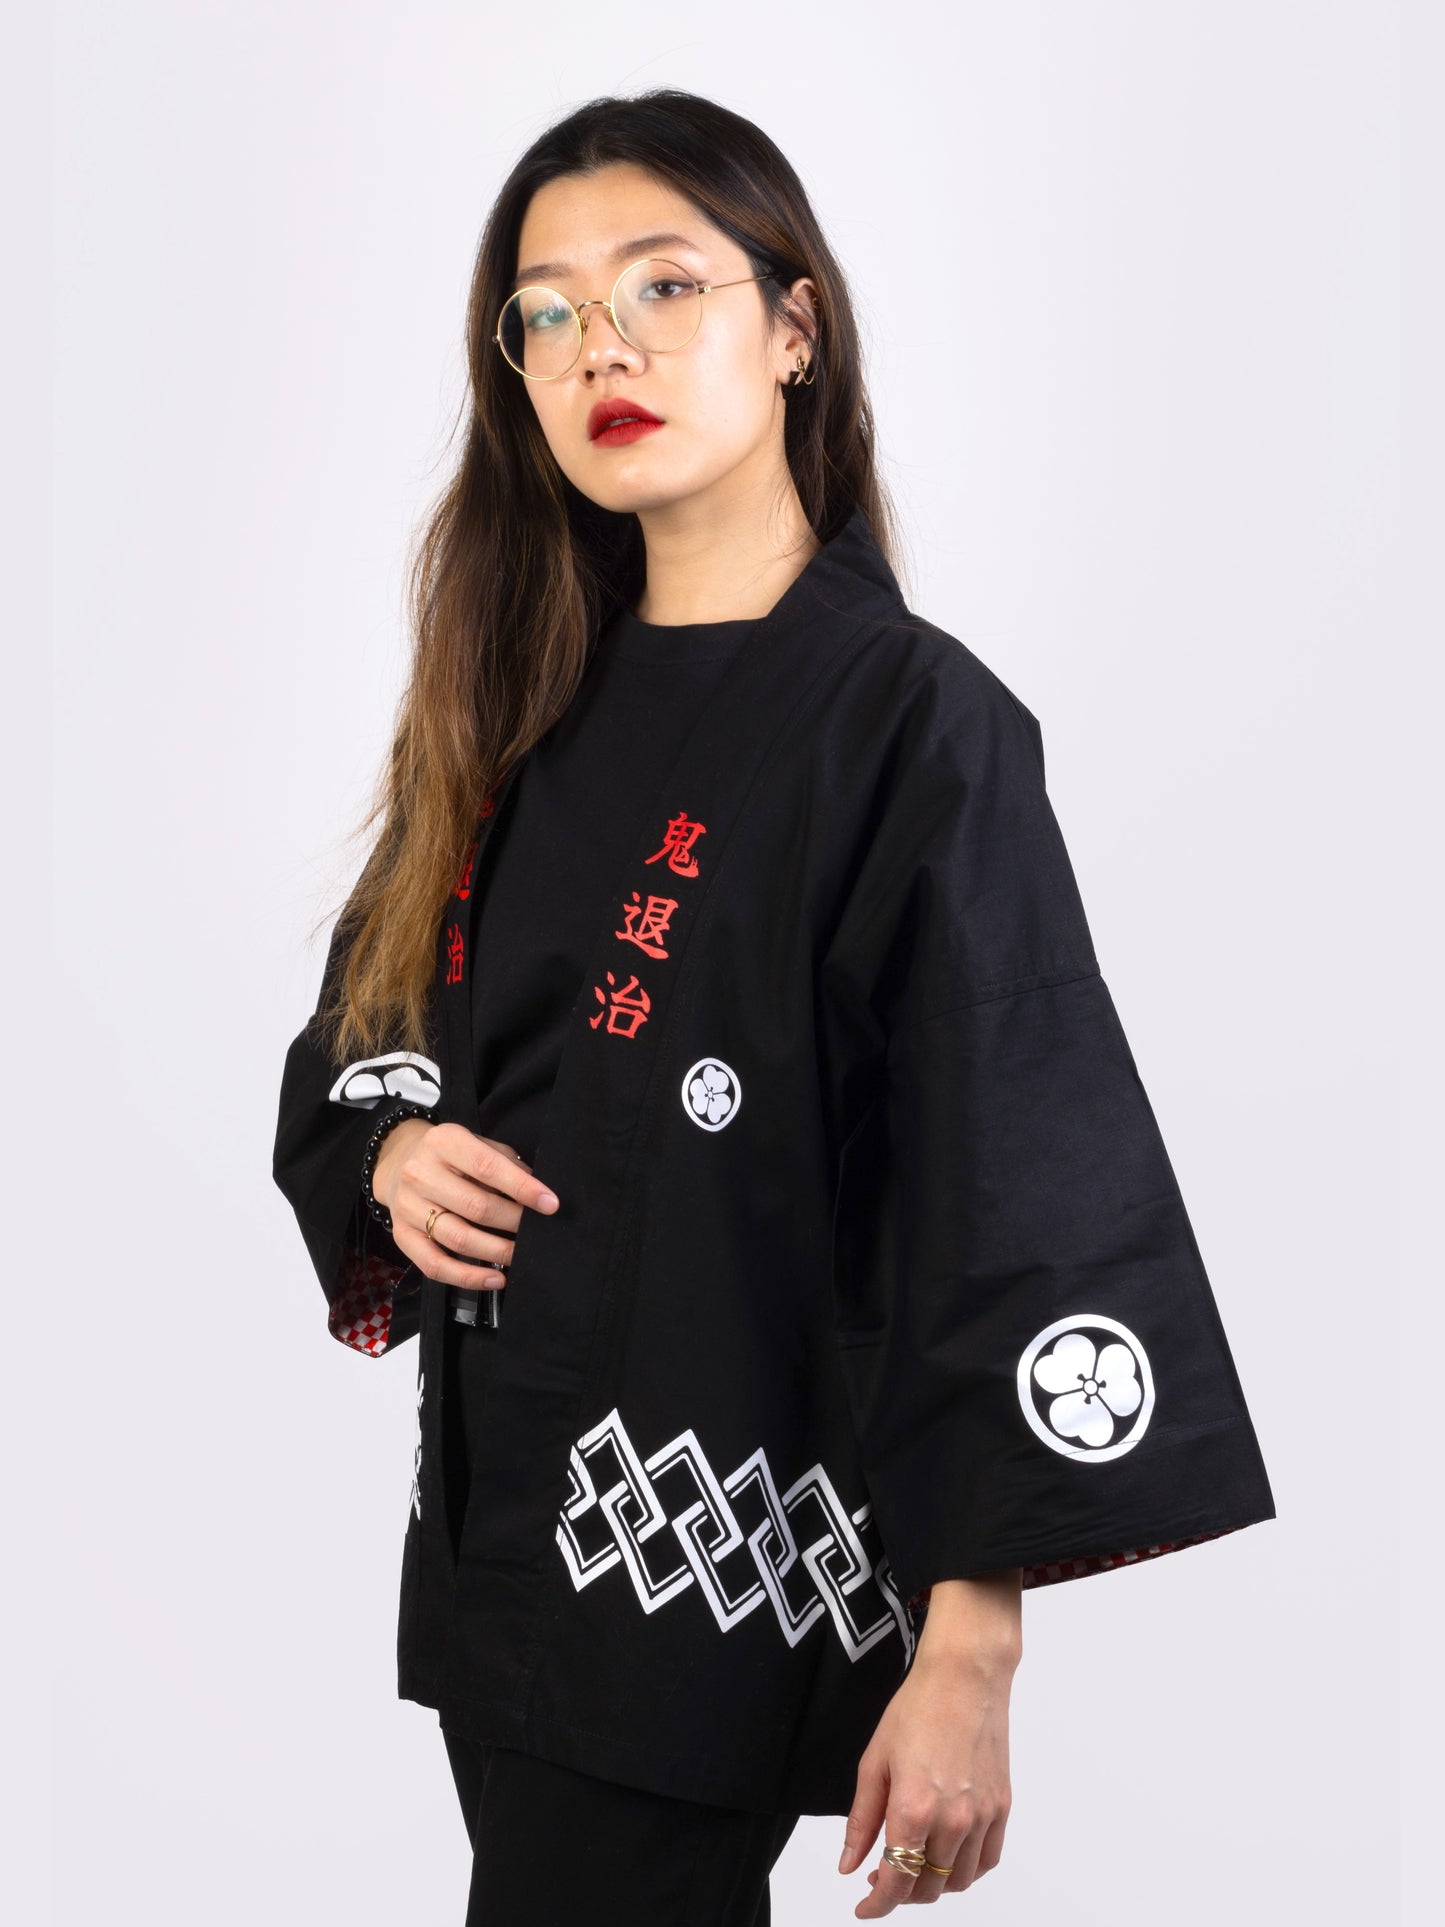 Kimono Happi 法被 noir